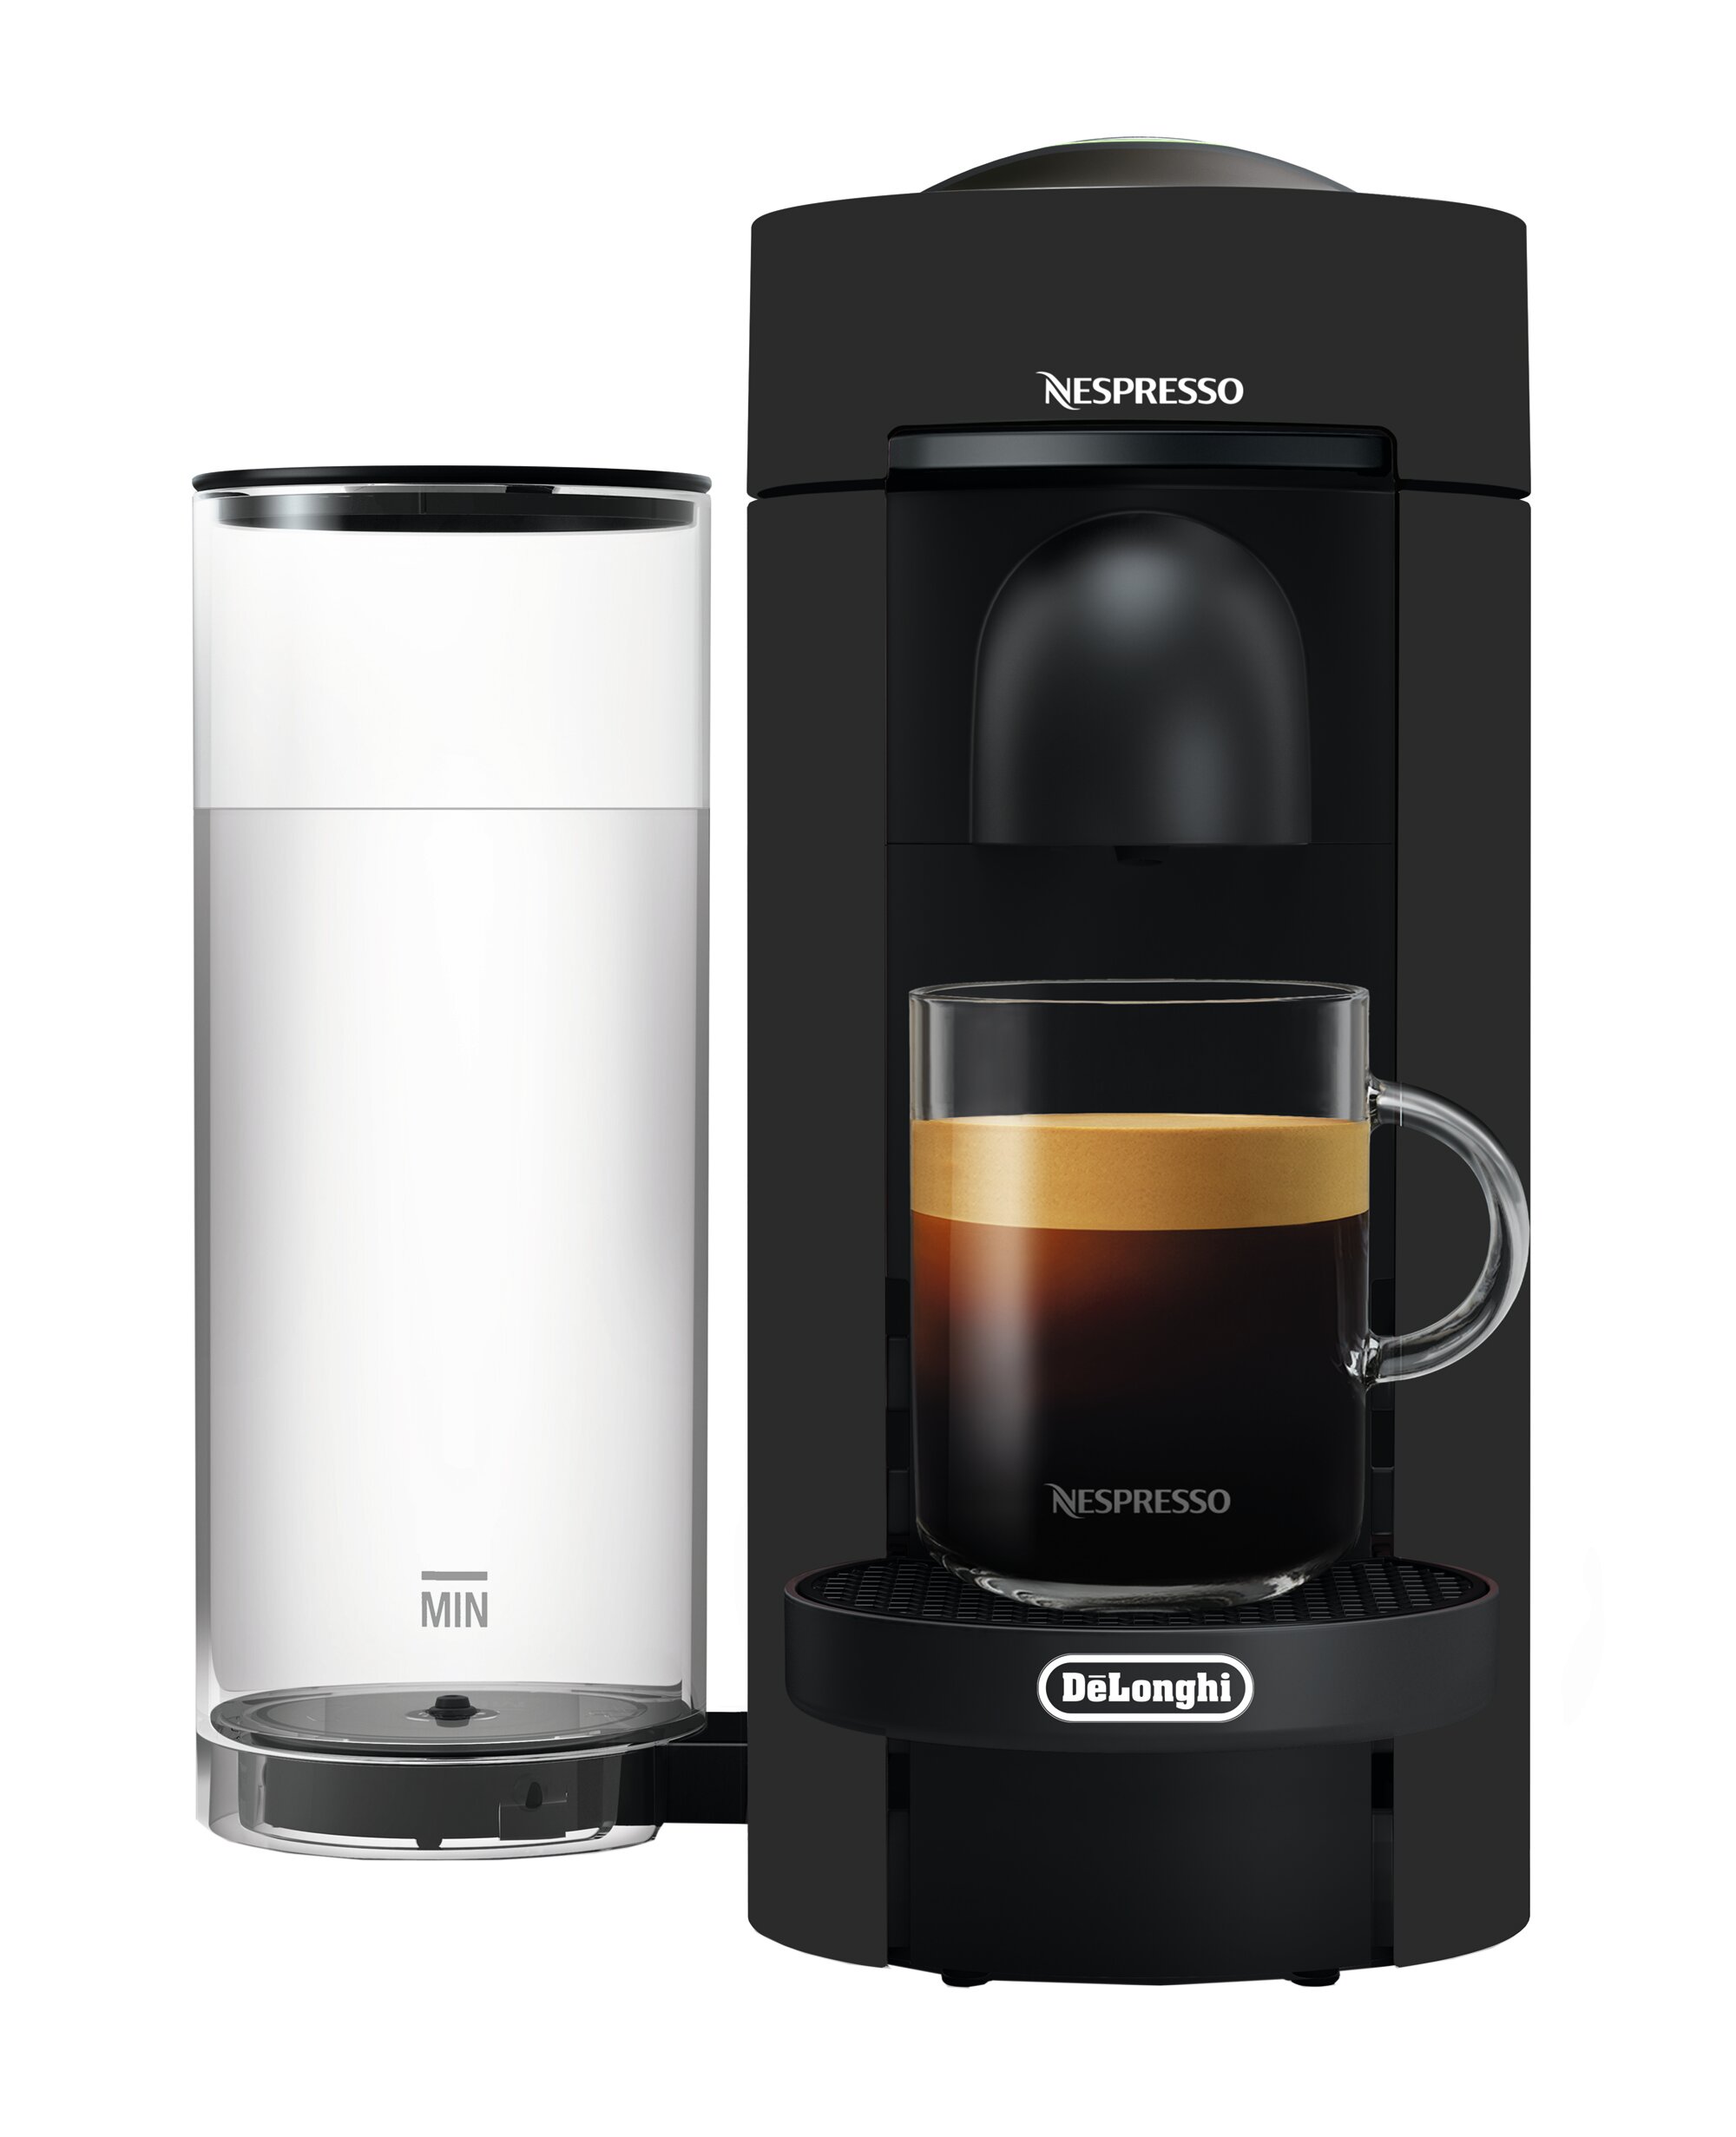 Nespresso VertuoPlus Coffee and Espresso Maker by DeLonghi Best Seller Assortment 30 Capsules Limited Edition Black Matte with Nespresso Vertuoline Coffee